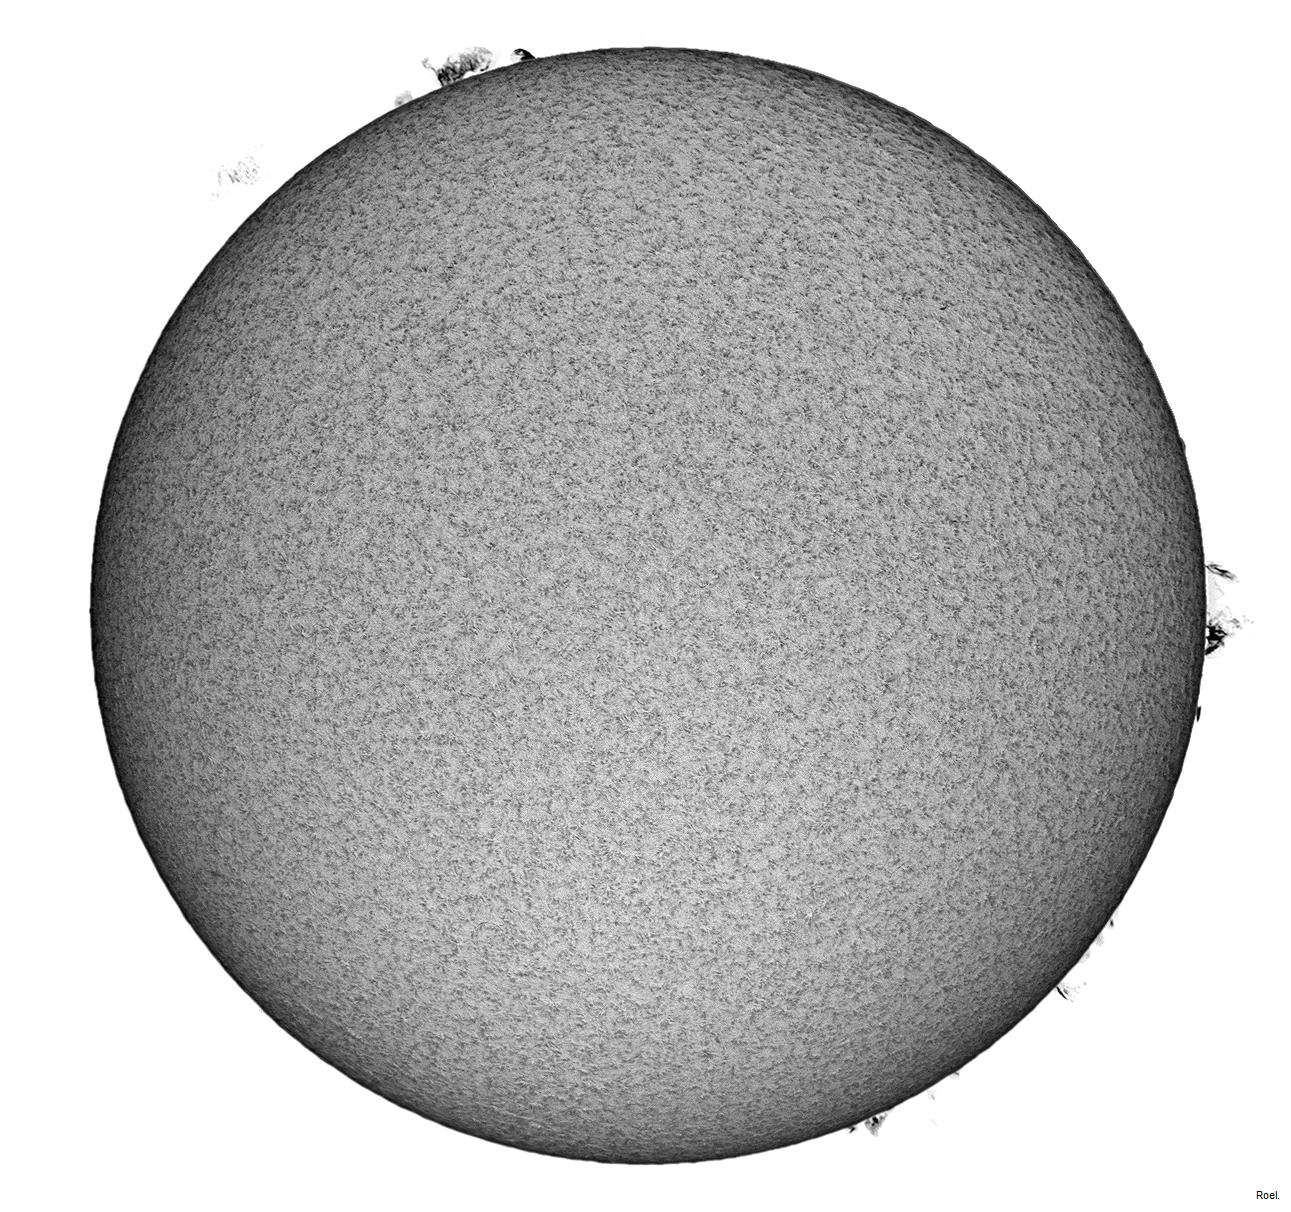 Sol del 23 de abril del 2019-Solarmax 90-DS-BF30-2inv-neg.jpg